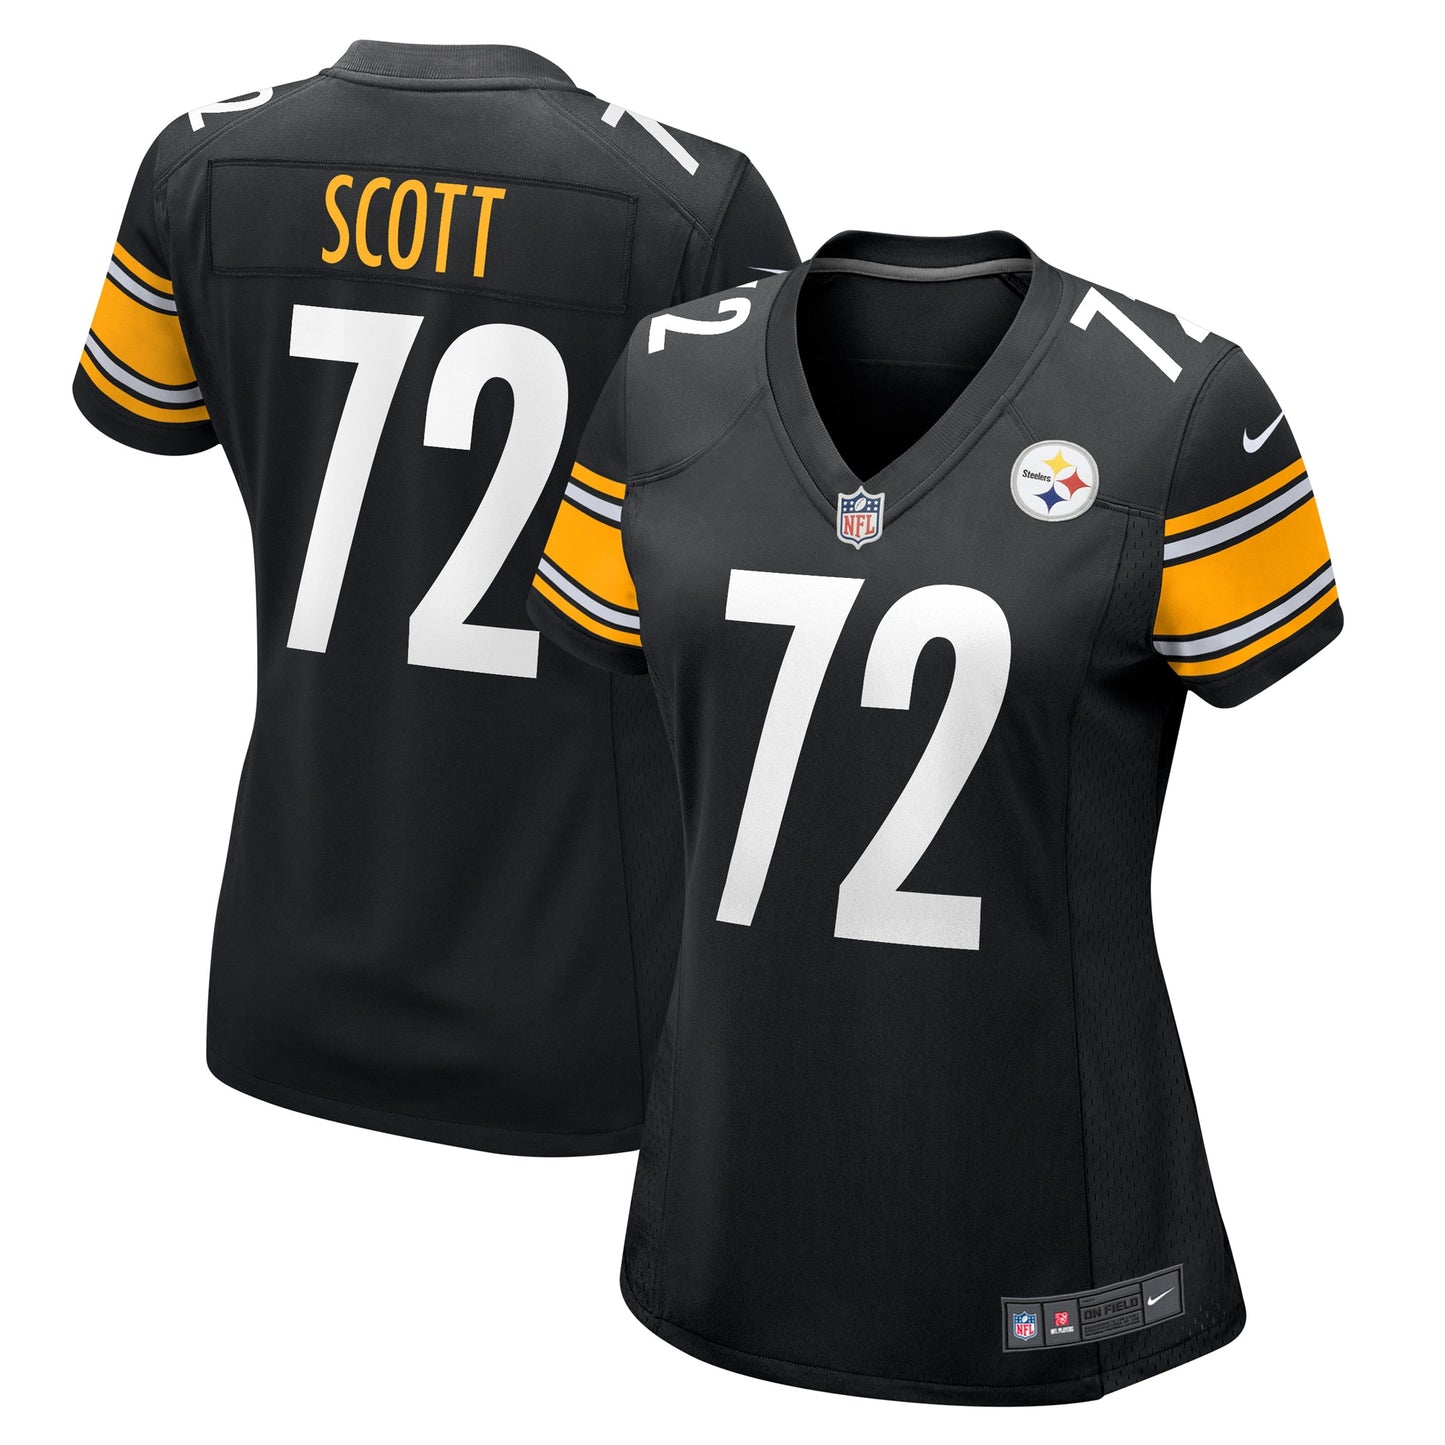 Trent Scott Pittsburgh Steelers Nike Women's Game Player Jersey - Black